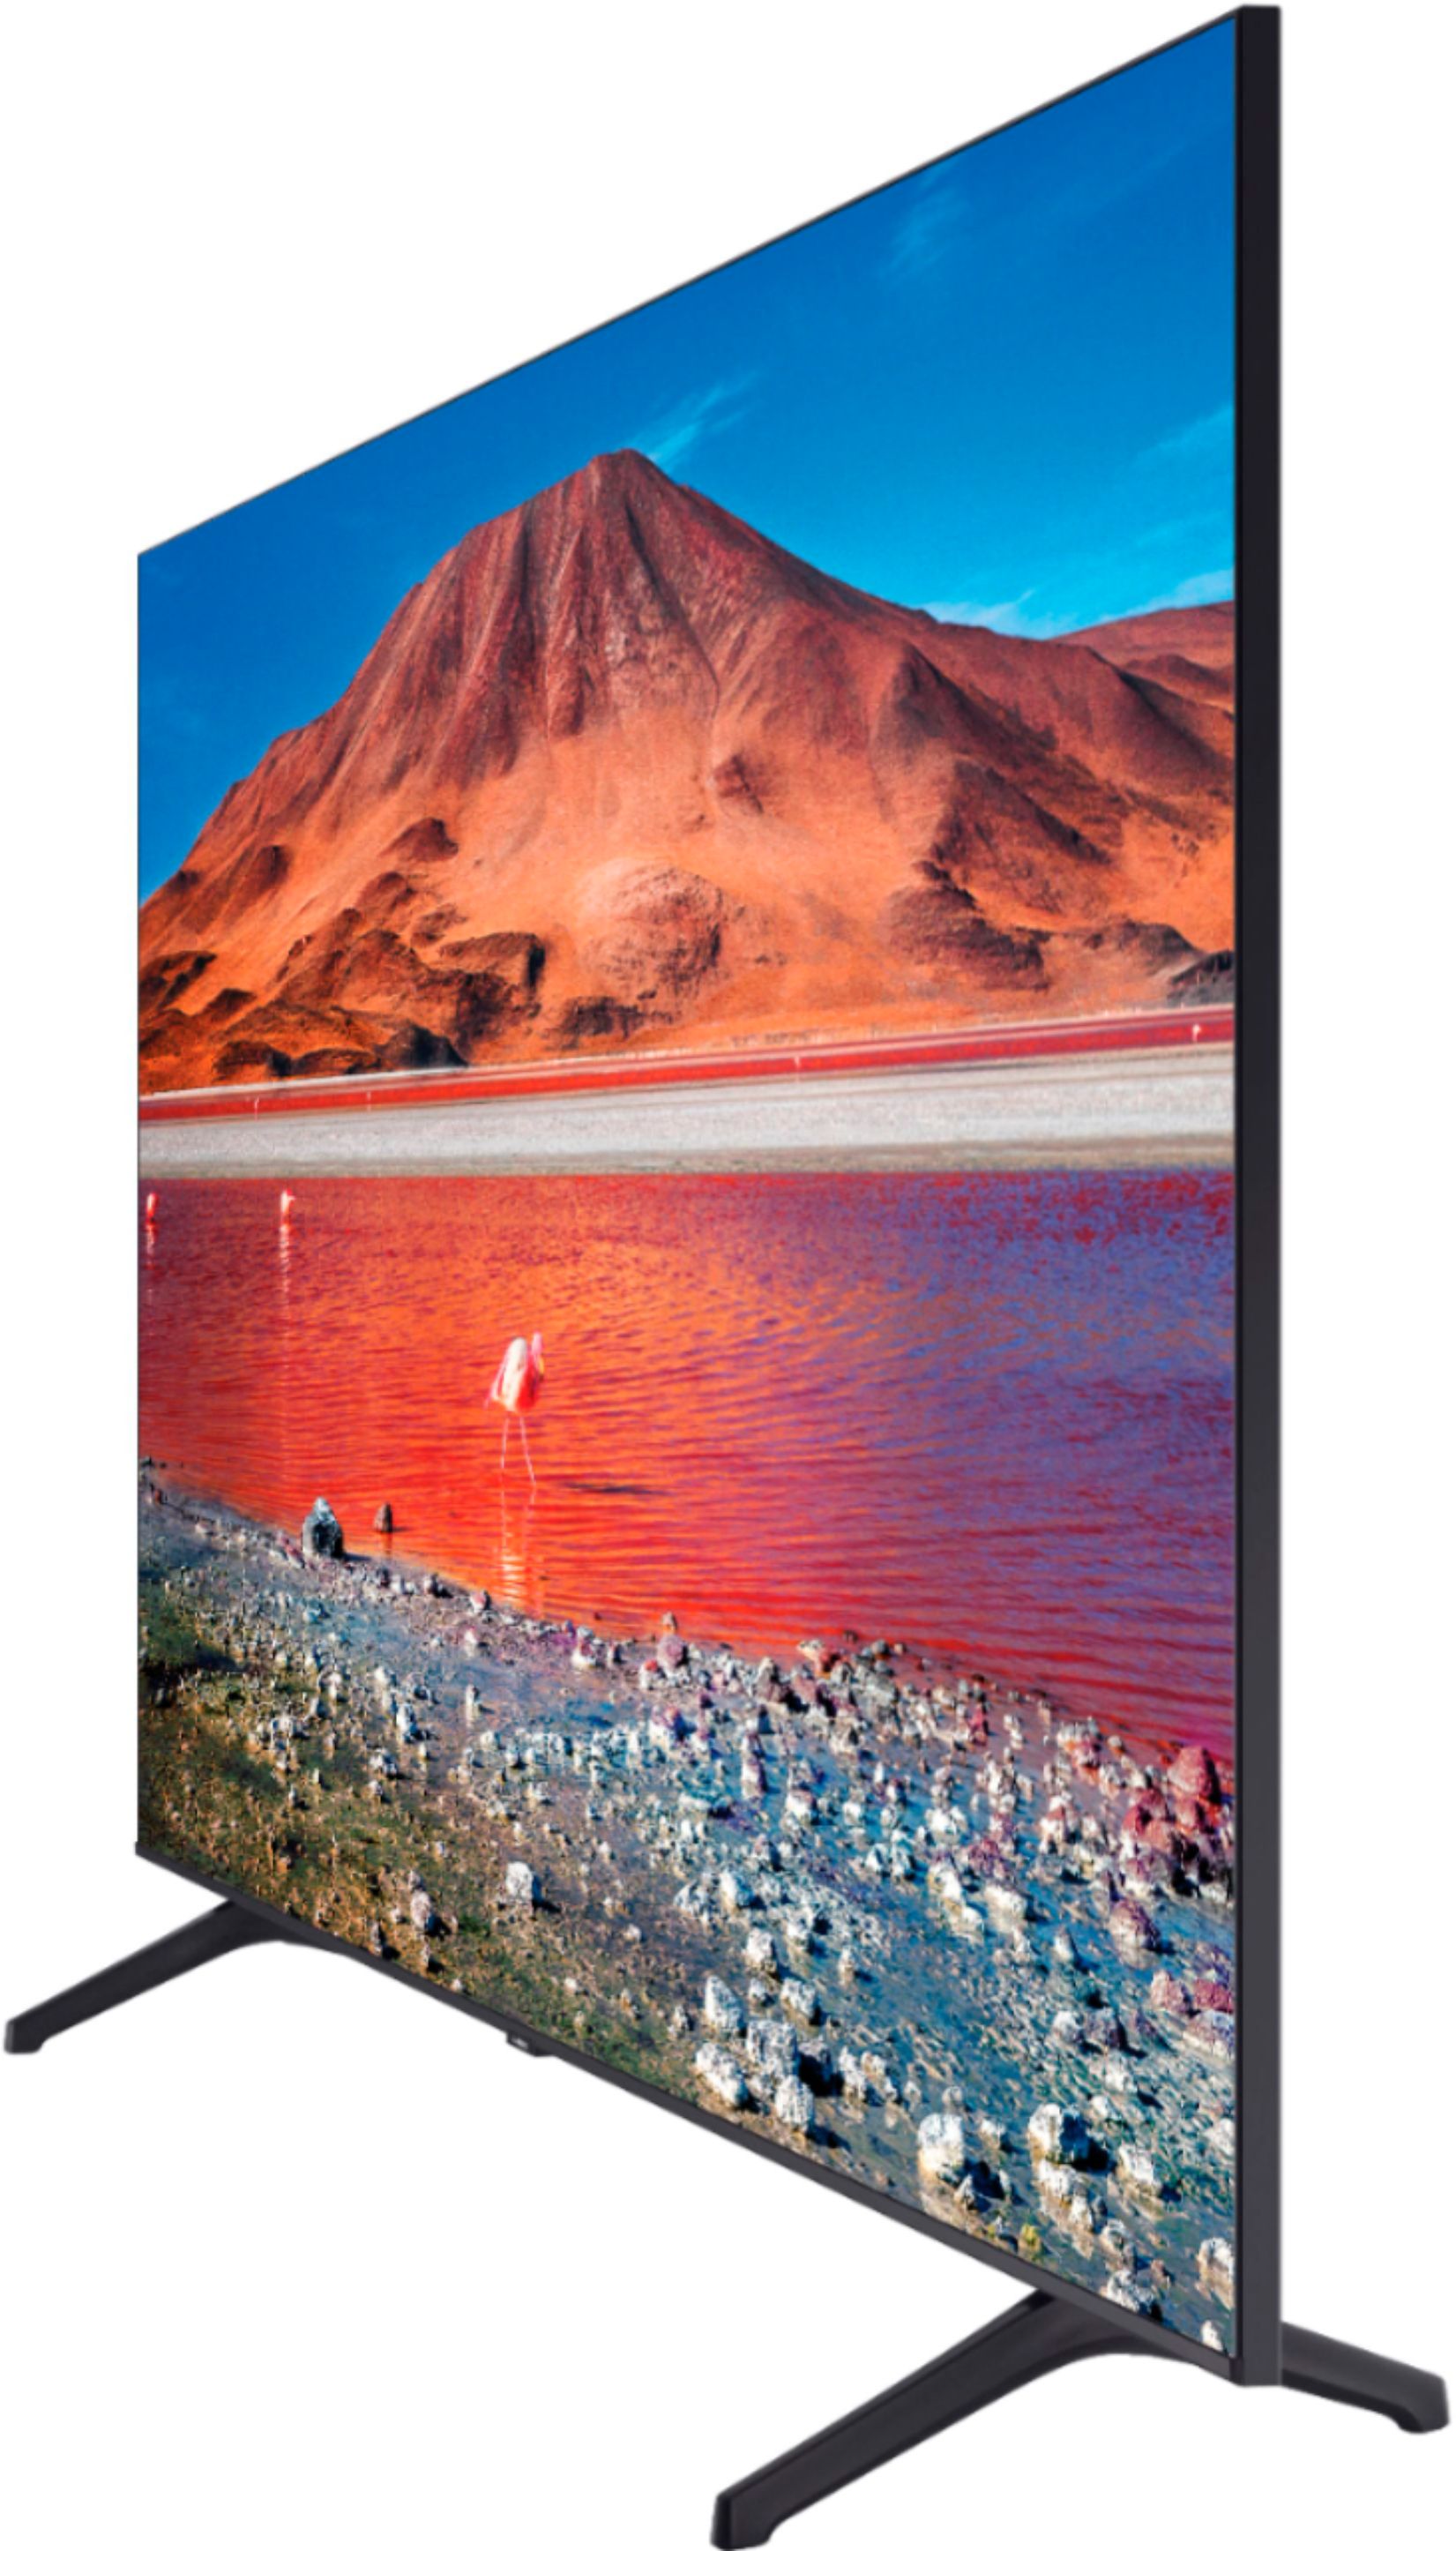 Samsung 55" 7 Series LED 4K UHD Smart Tizen TV UN55TU7000FXZA Best Buy